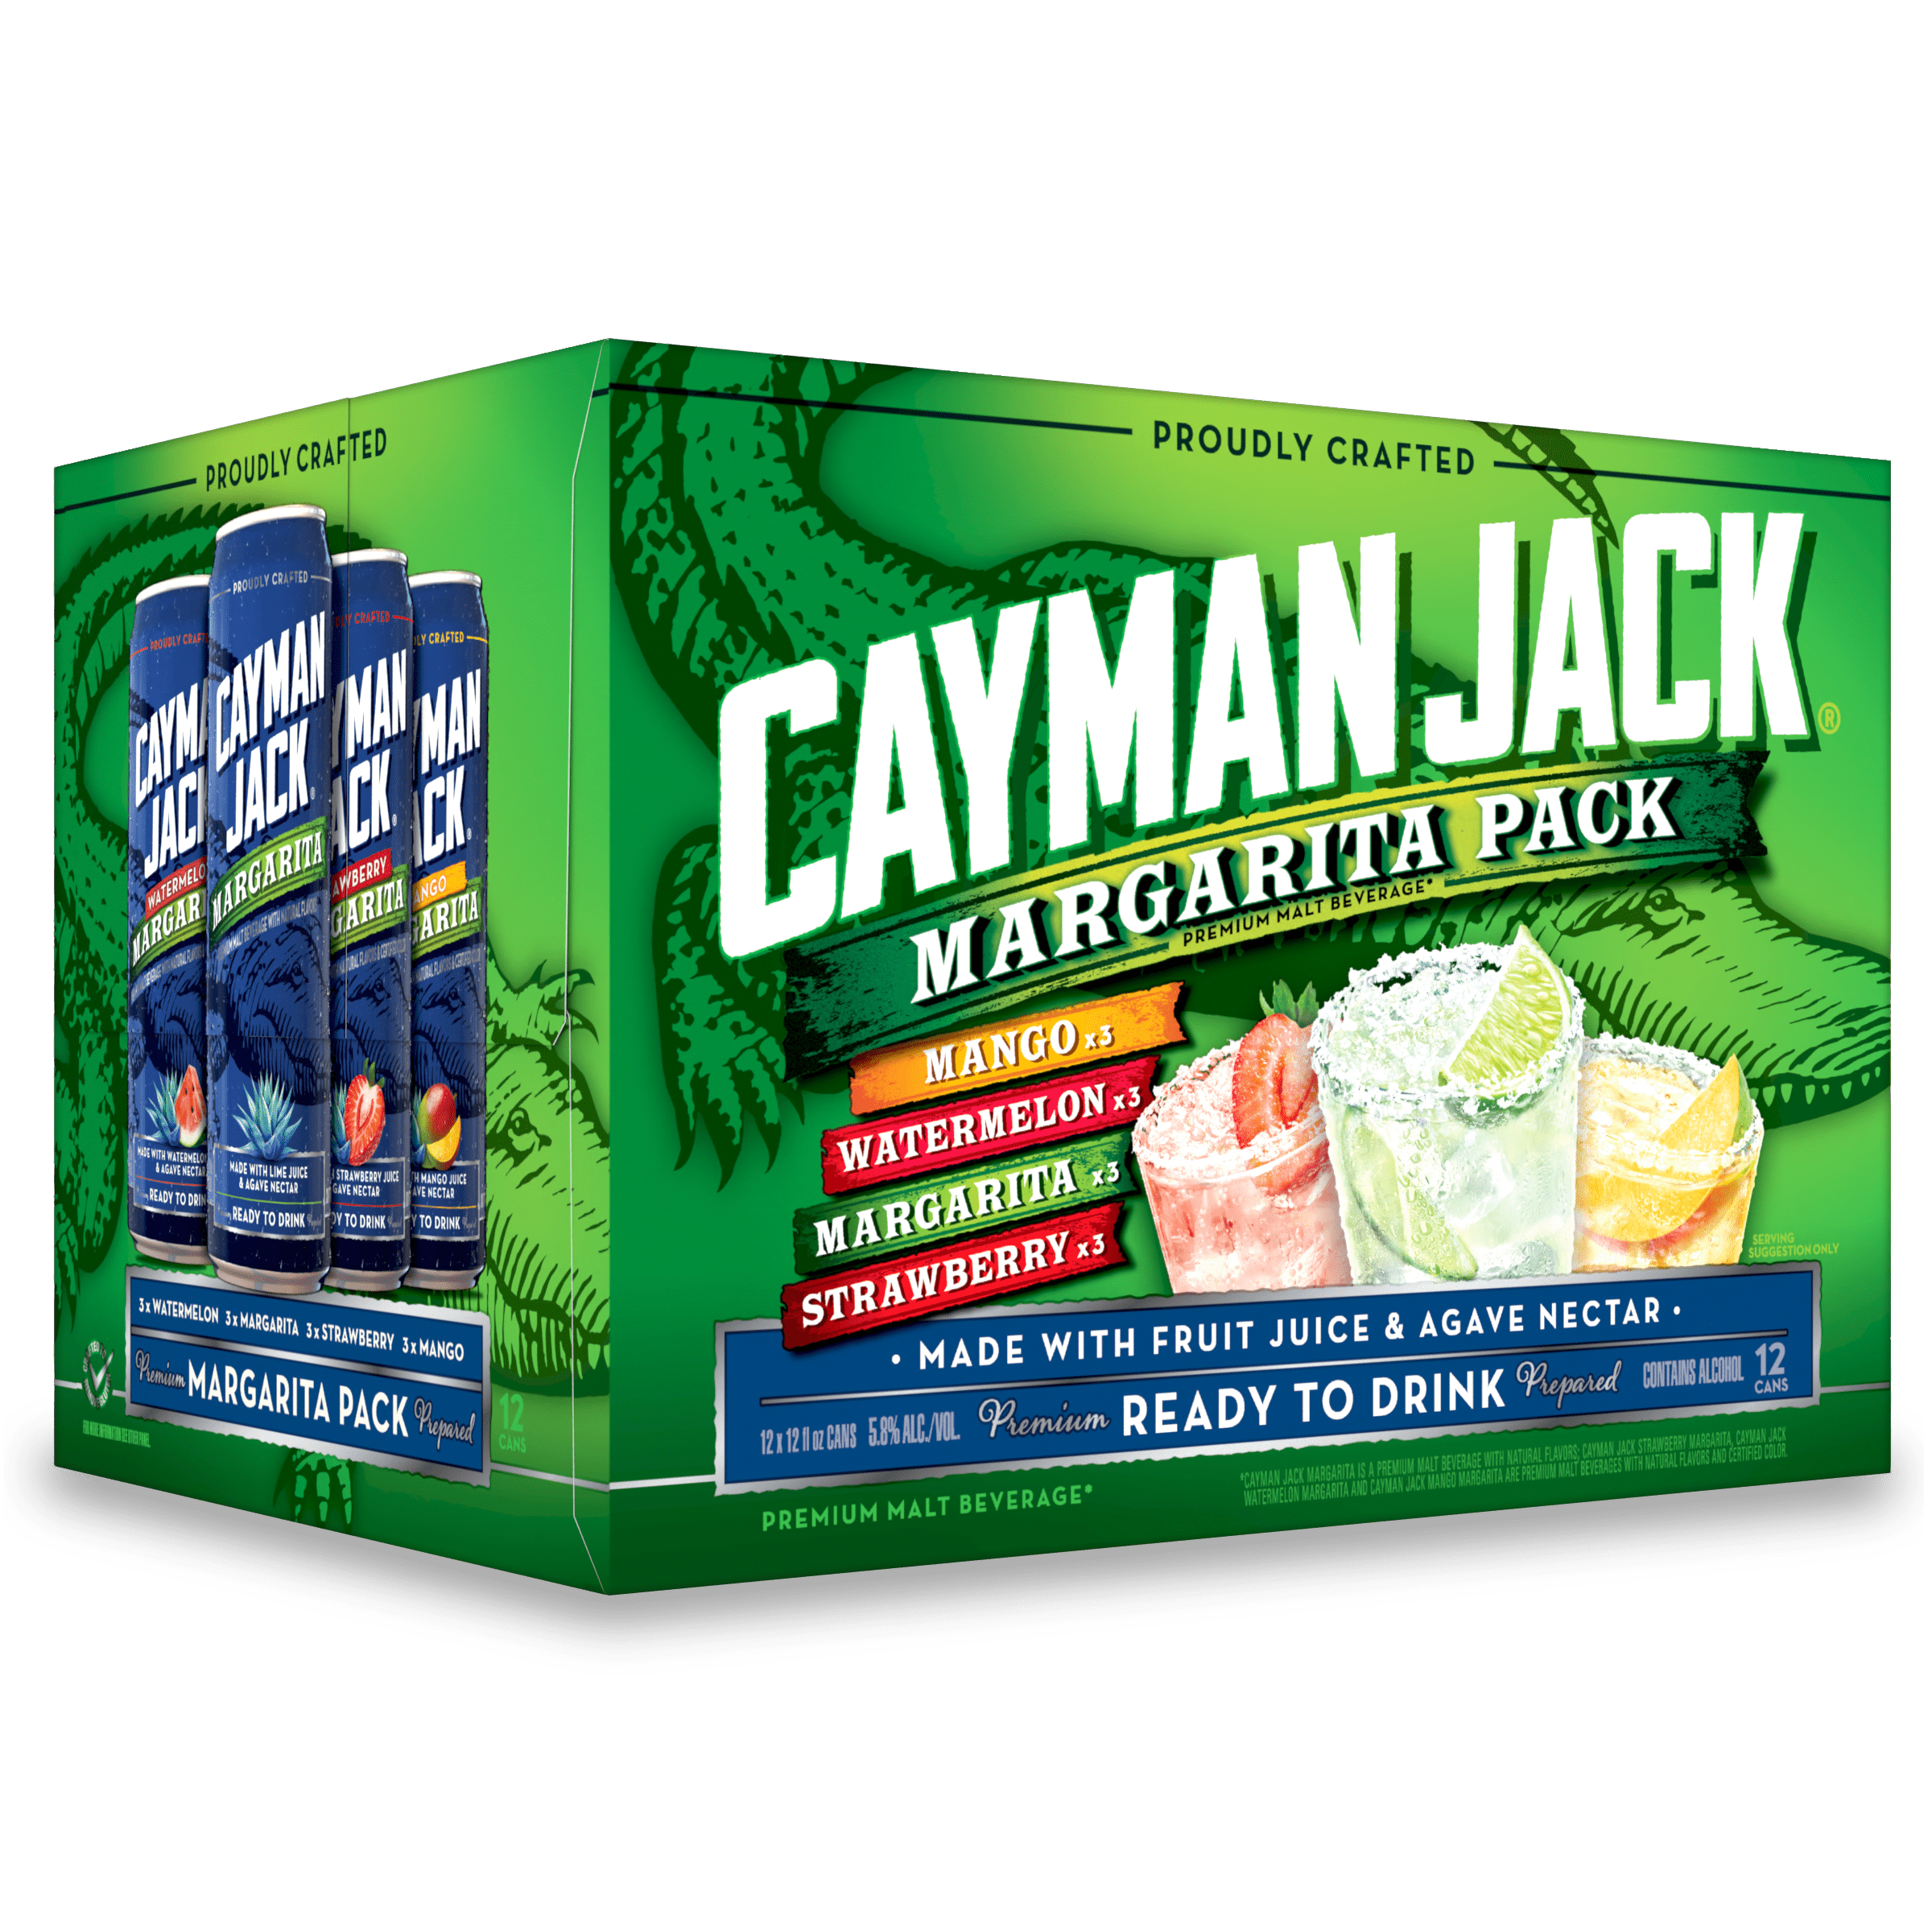 Cayman Jack Margarita Nutrition Label Saunders faruolo 99